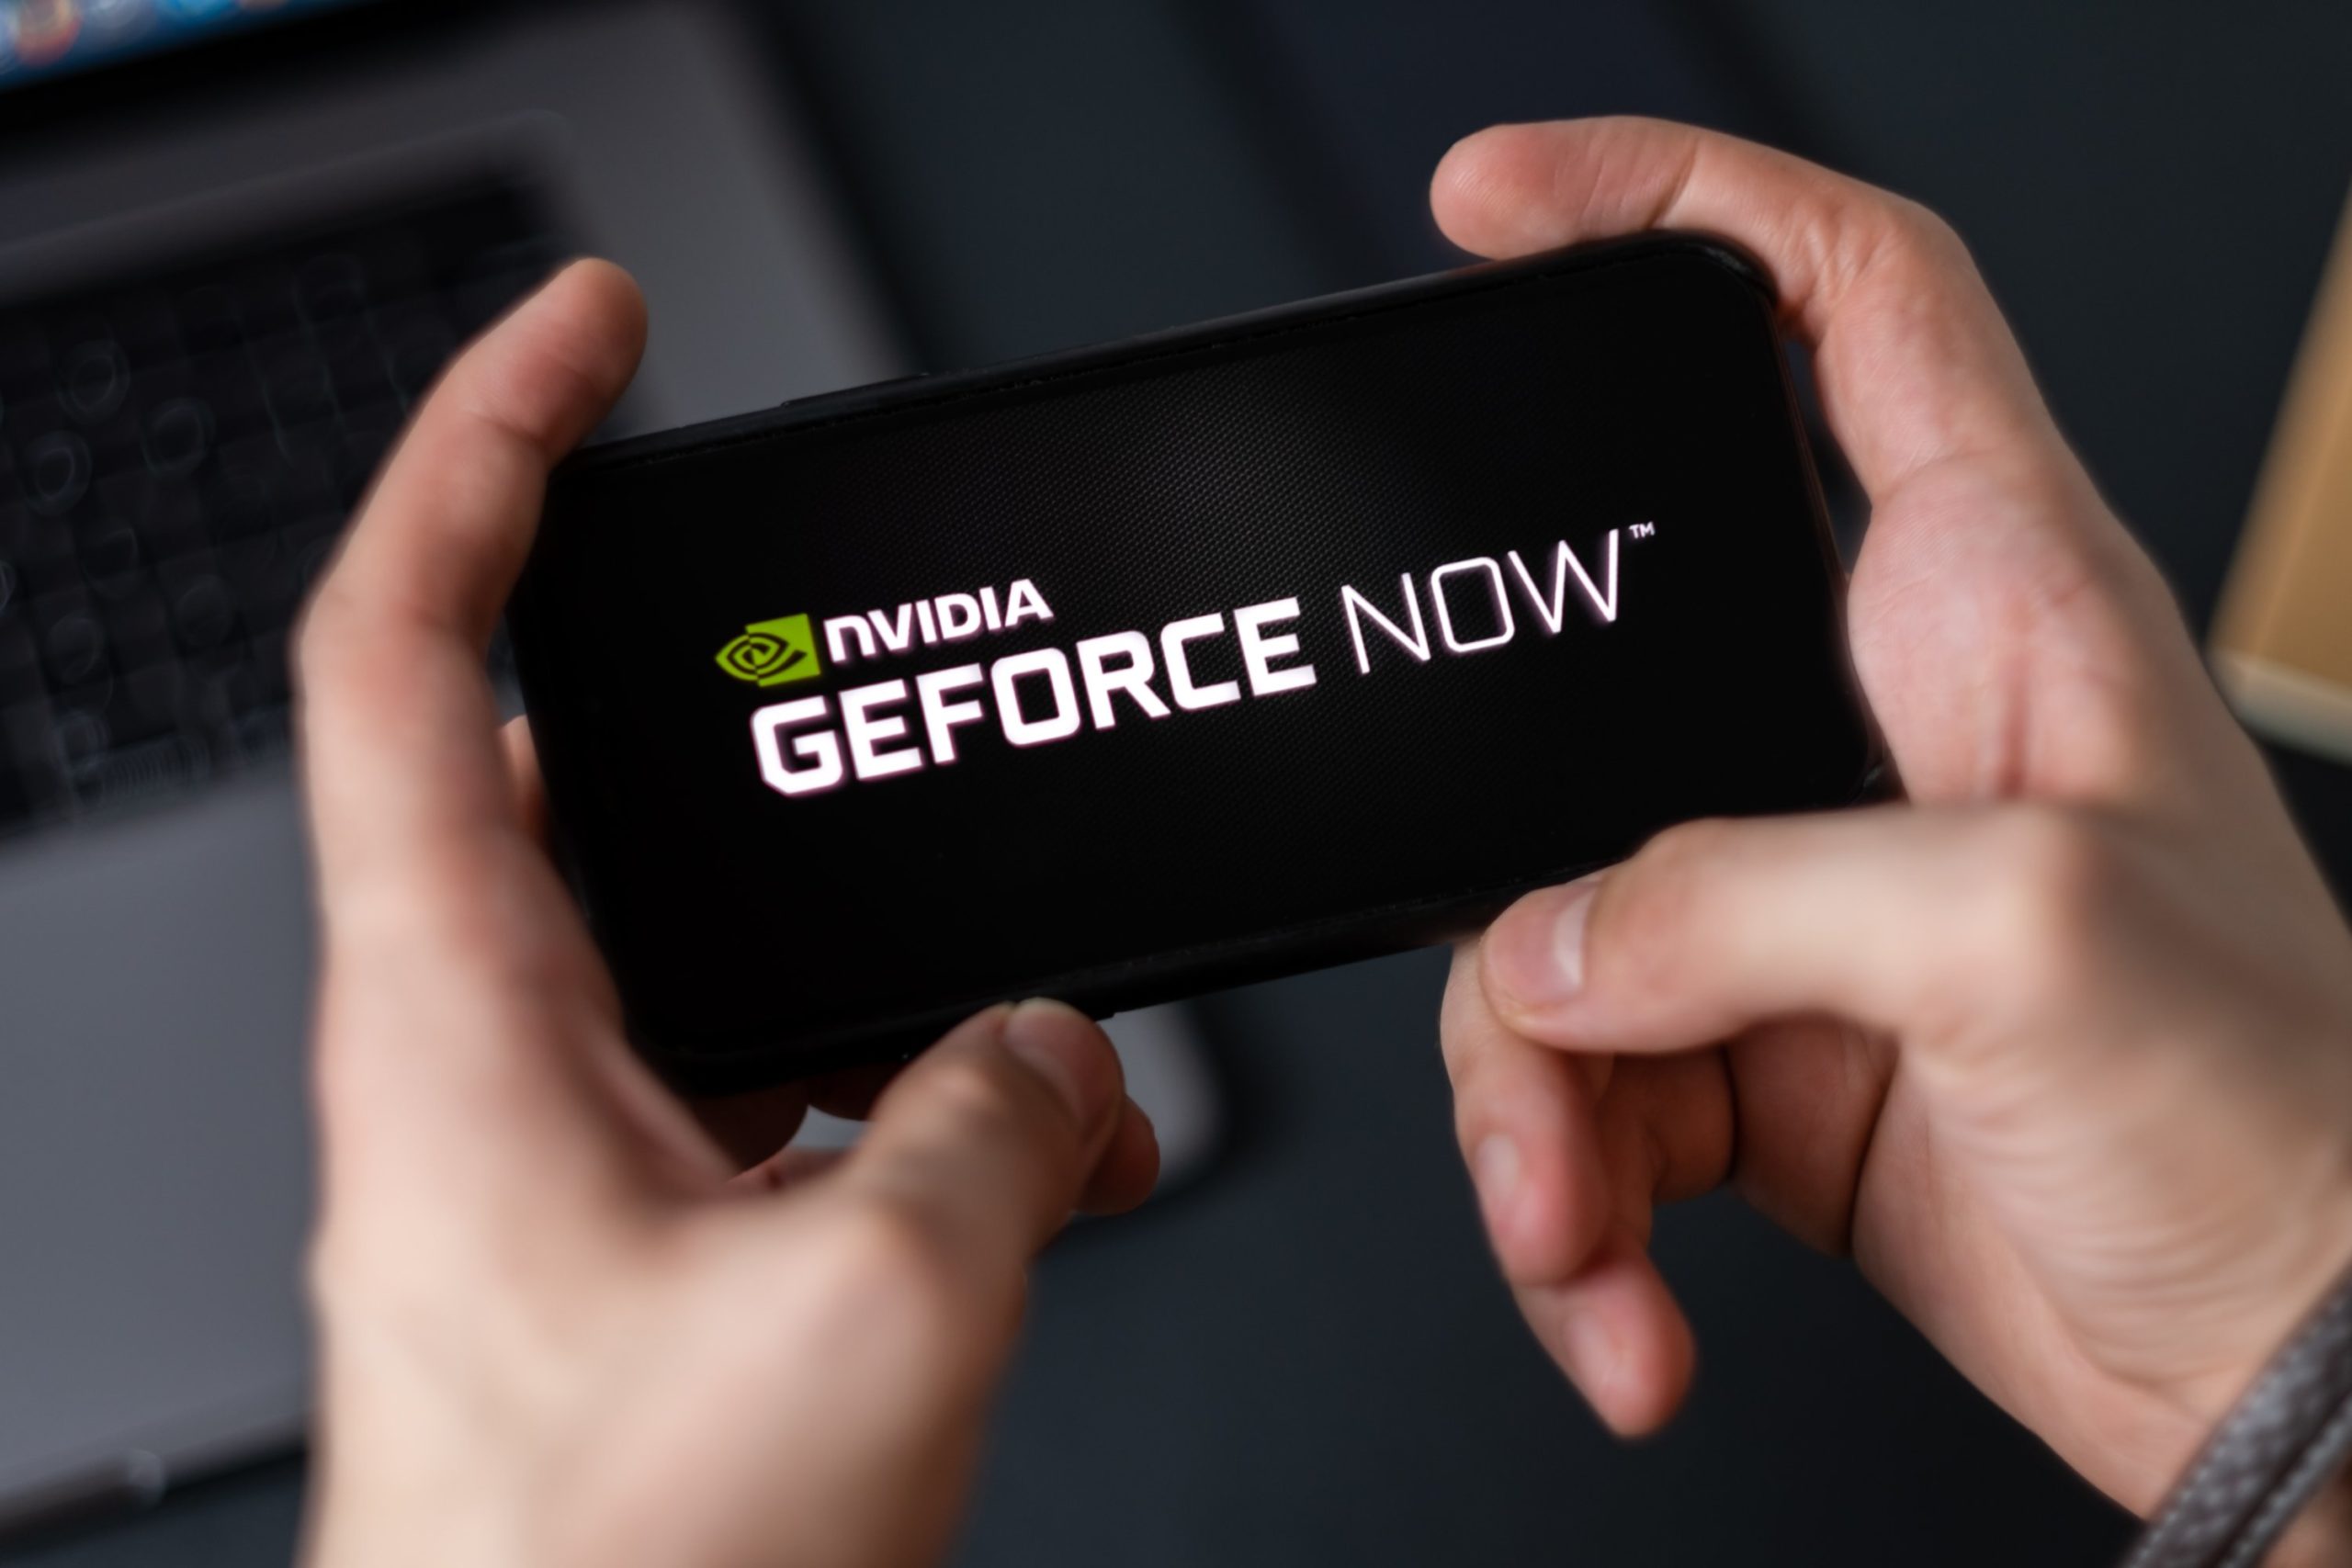 Nvidia is bringing GeForce NOW to SA via Rain partnership